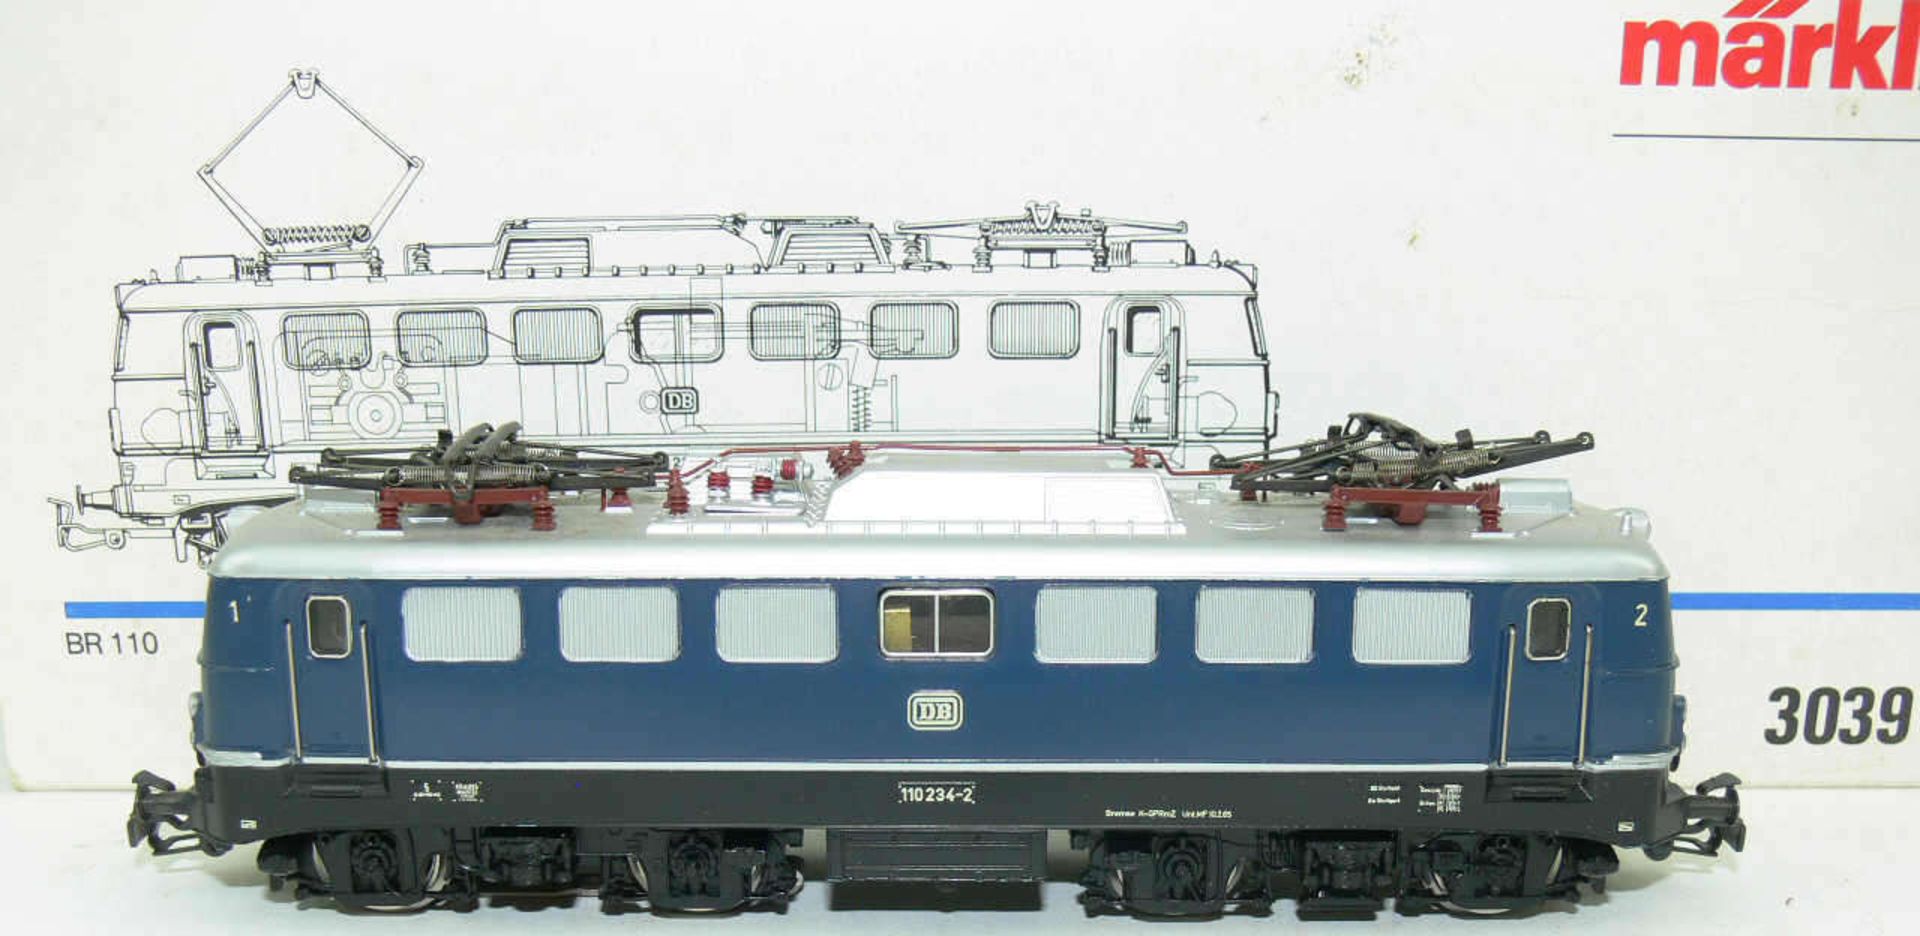 Märklin H0 3039, E - Lokomotive BR 110 der DB. BN 110 234-2. Guss. Blau. Minimale Laufspuren. In